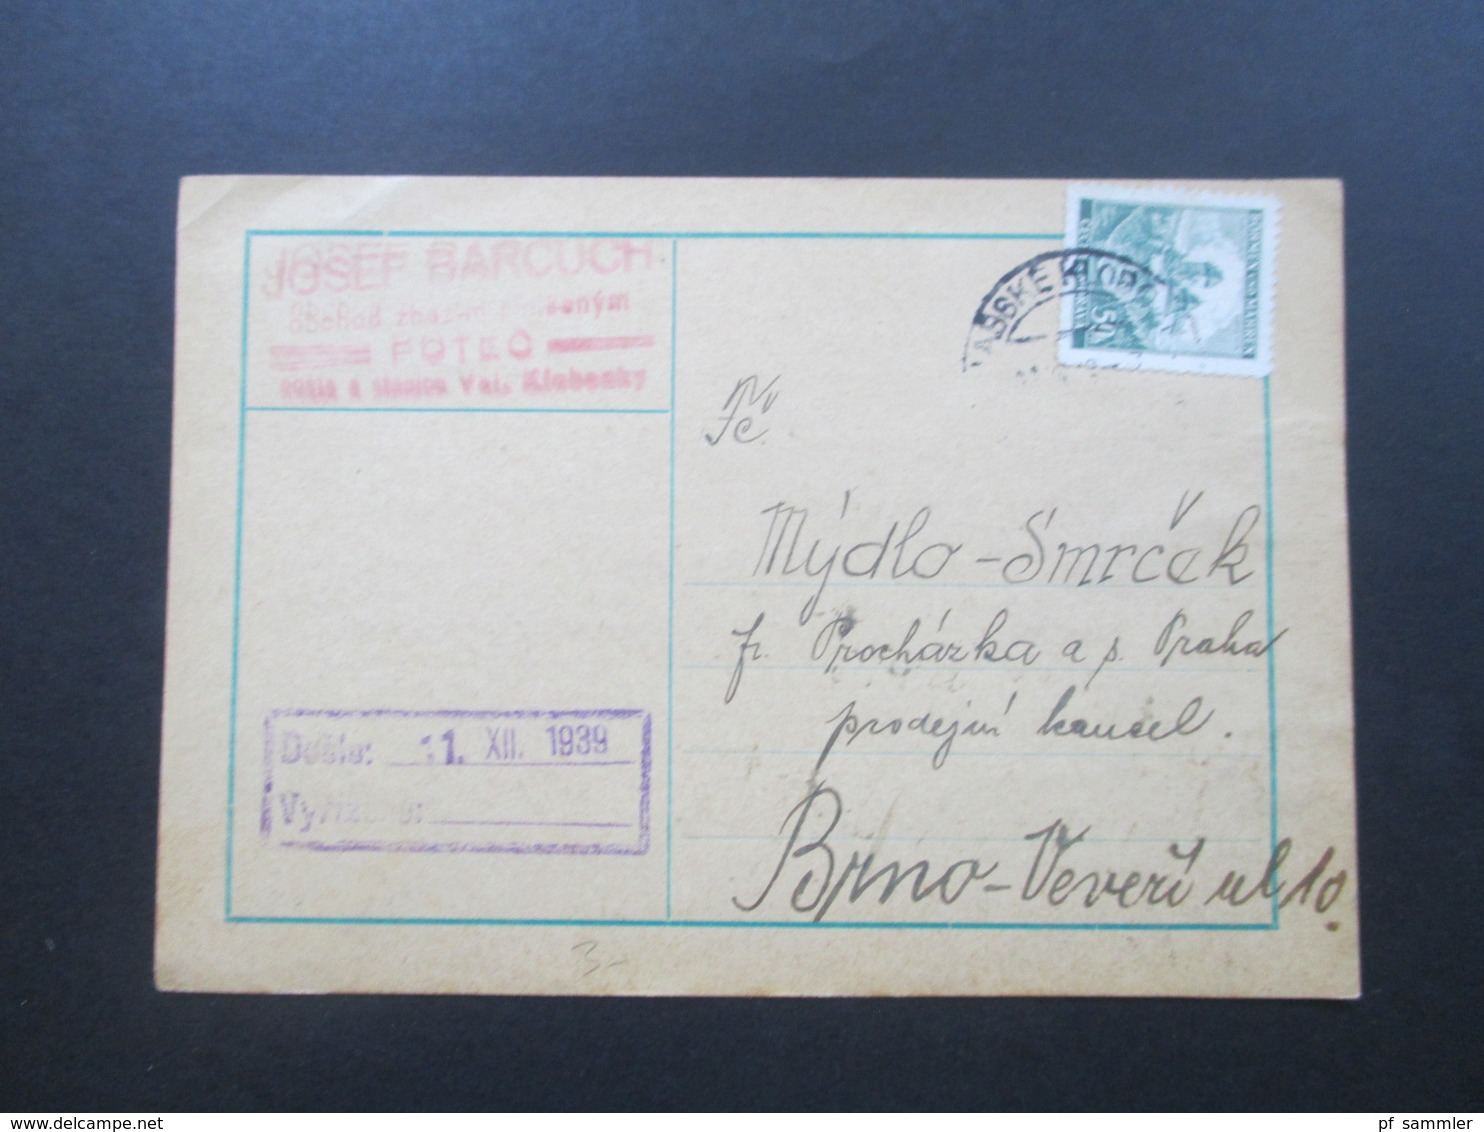 Böhmen Und Mähren 1939 Postkarte Firmenkarte Josef Barcuch Potec. Interessante Karte! - Briefe U. Dokumente